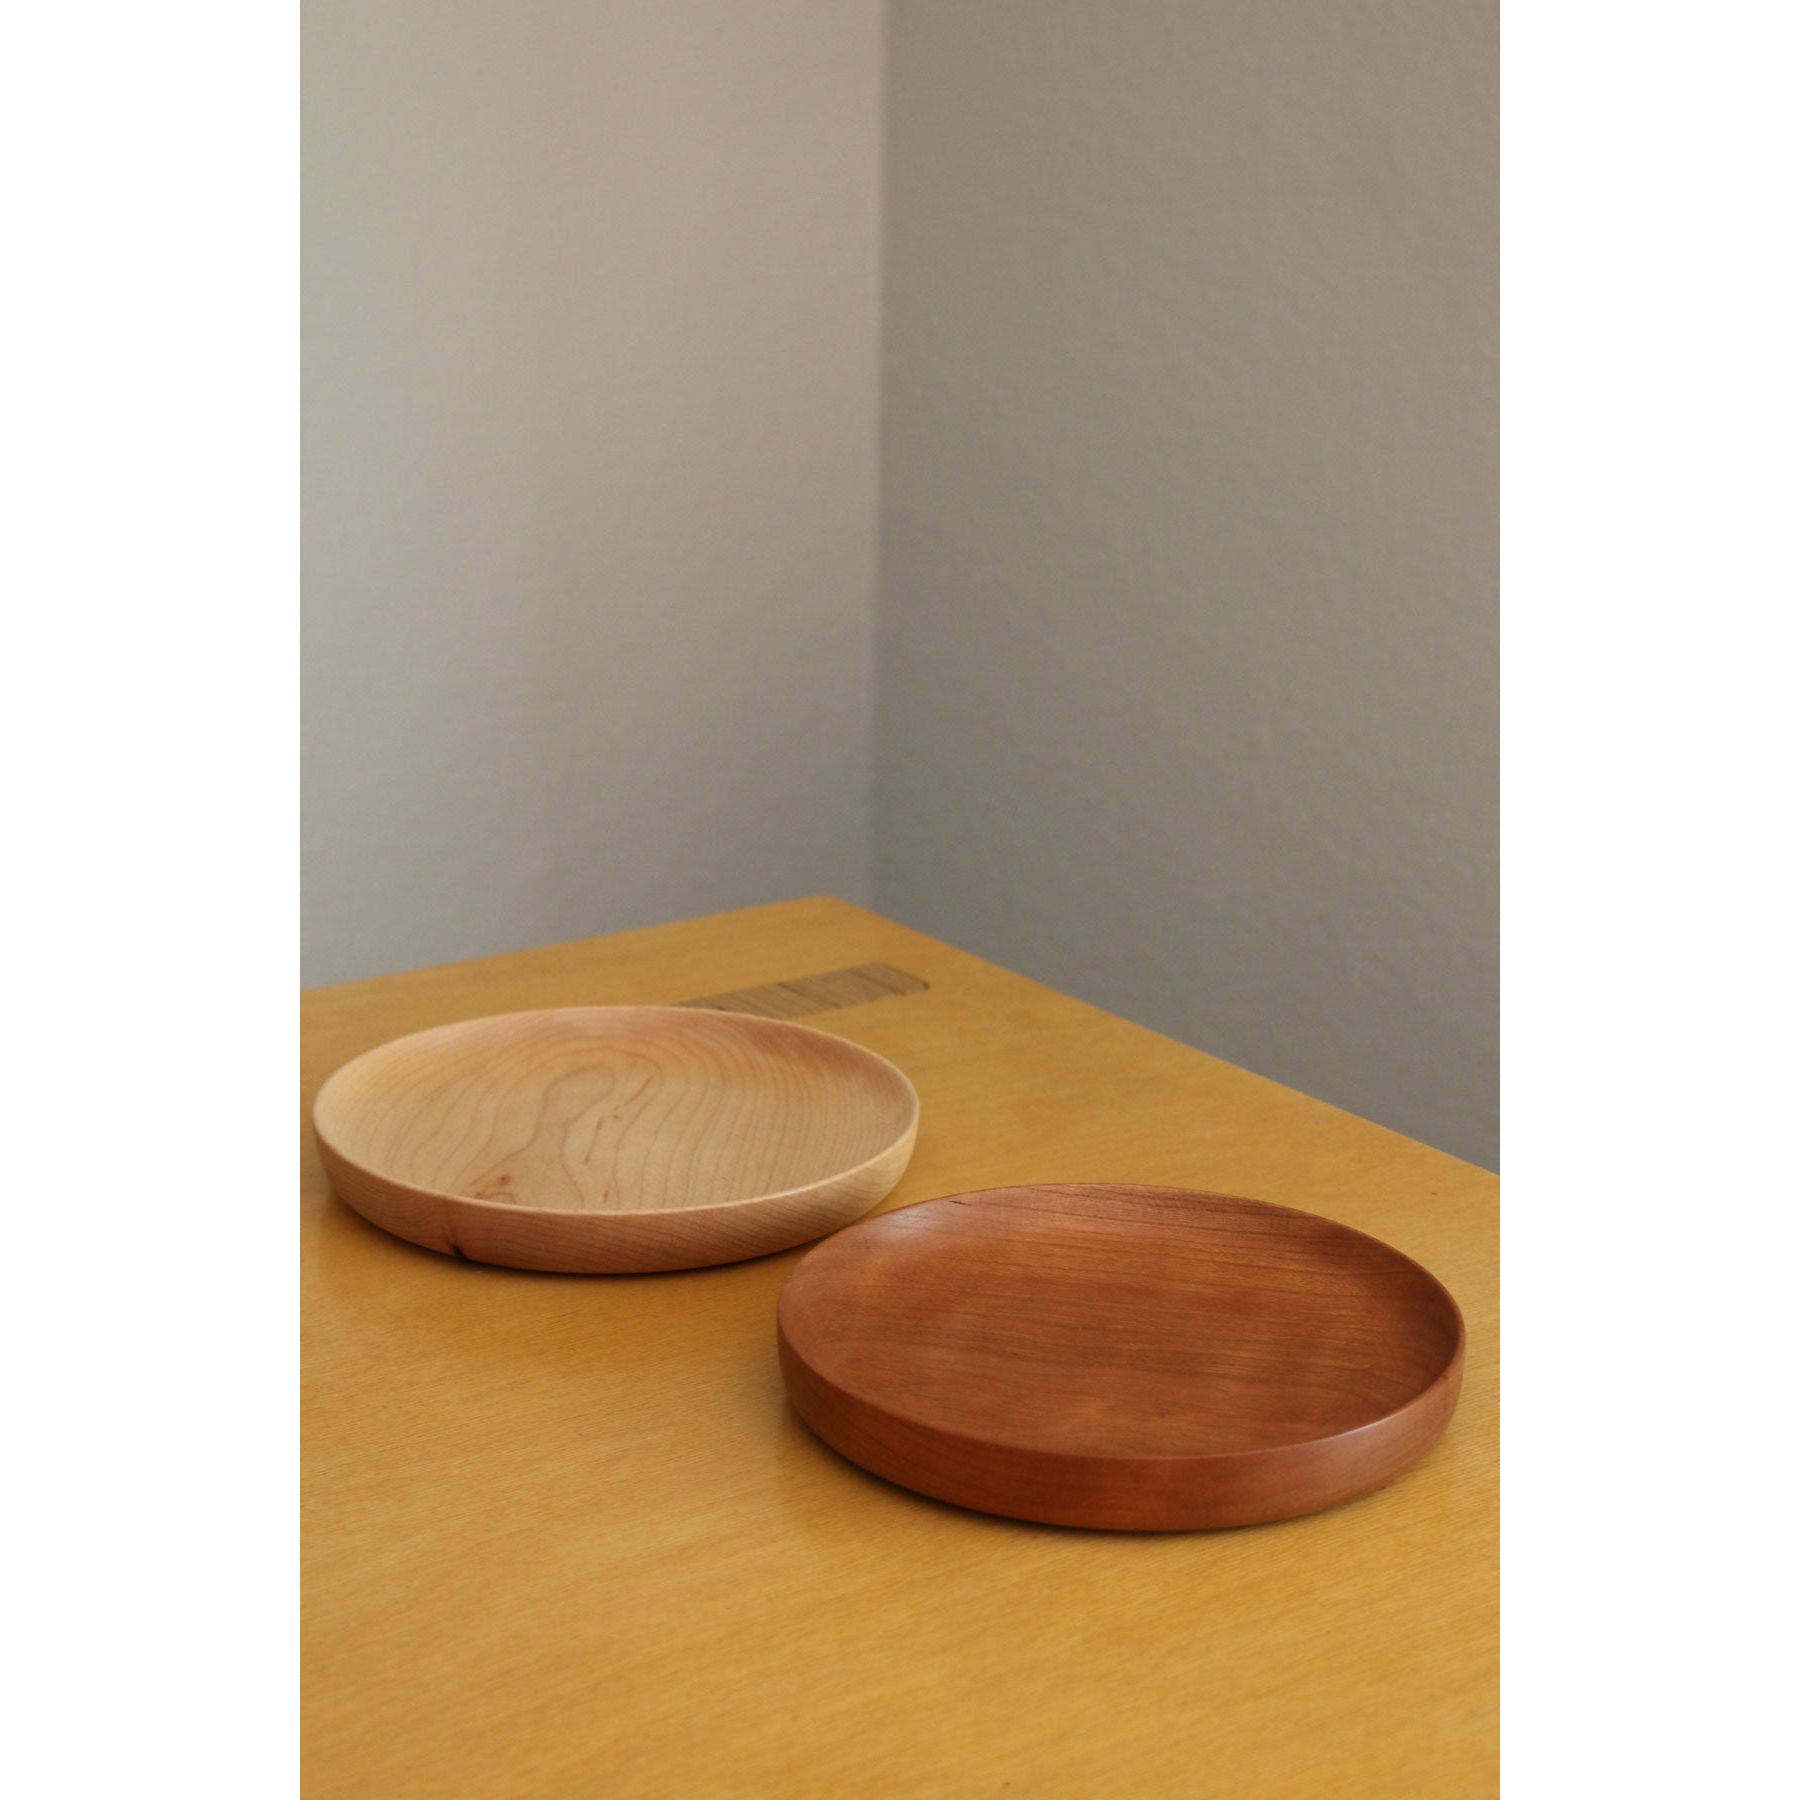 Hand turned plates by koppa.wood